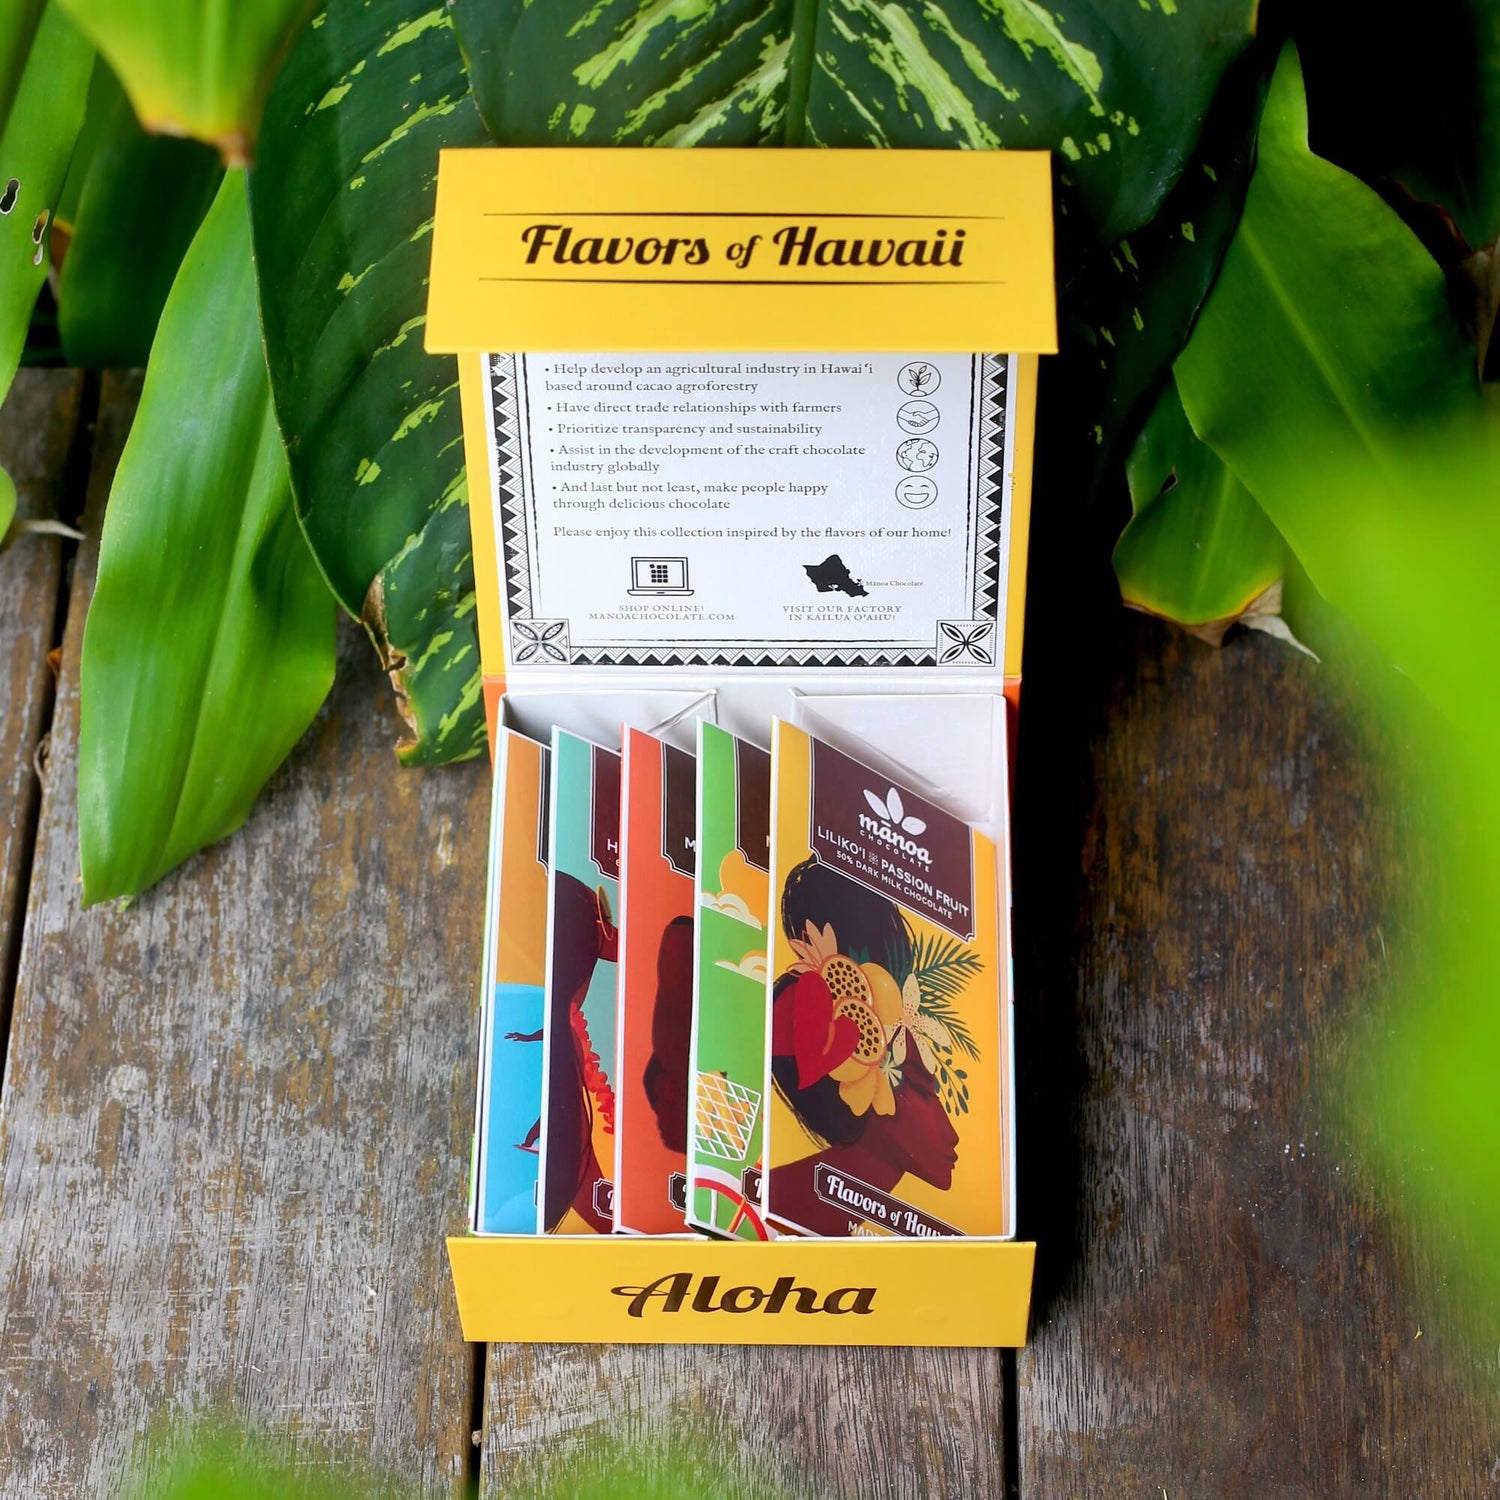 Flavors of Hawaii box showing 5 chocolate bars inside